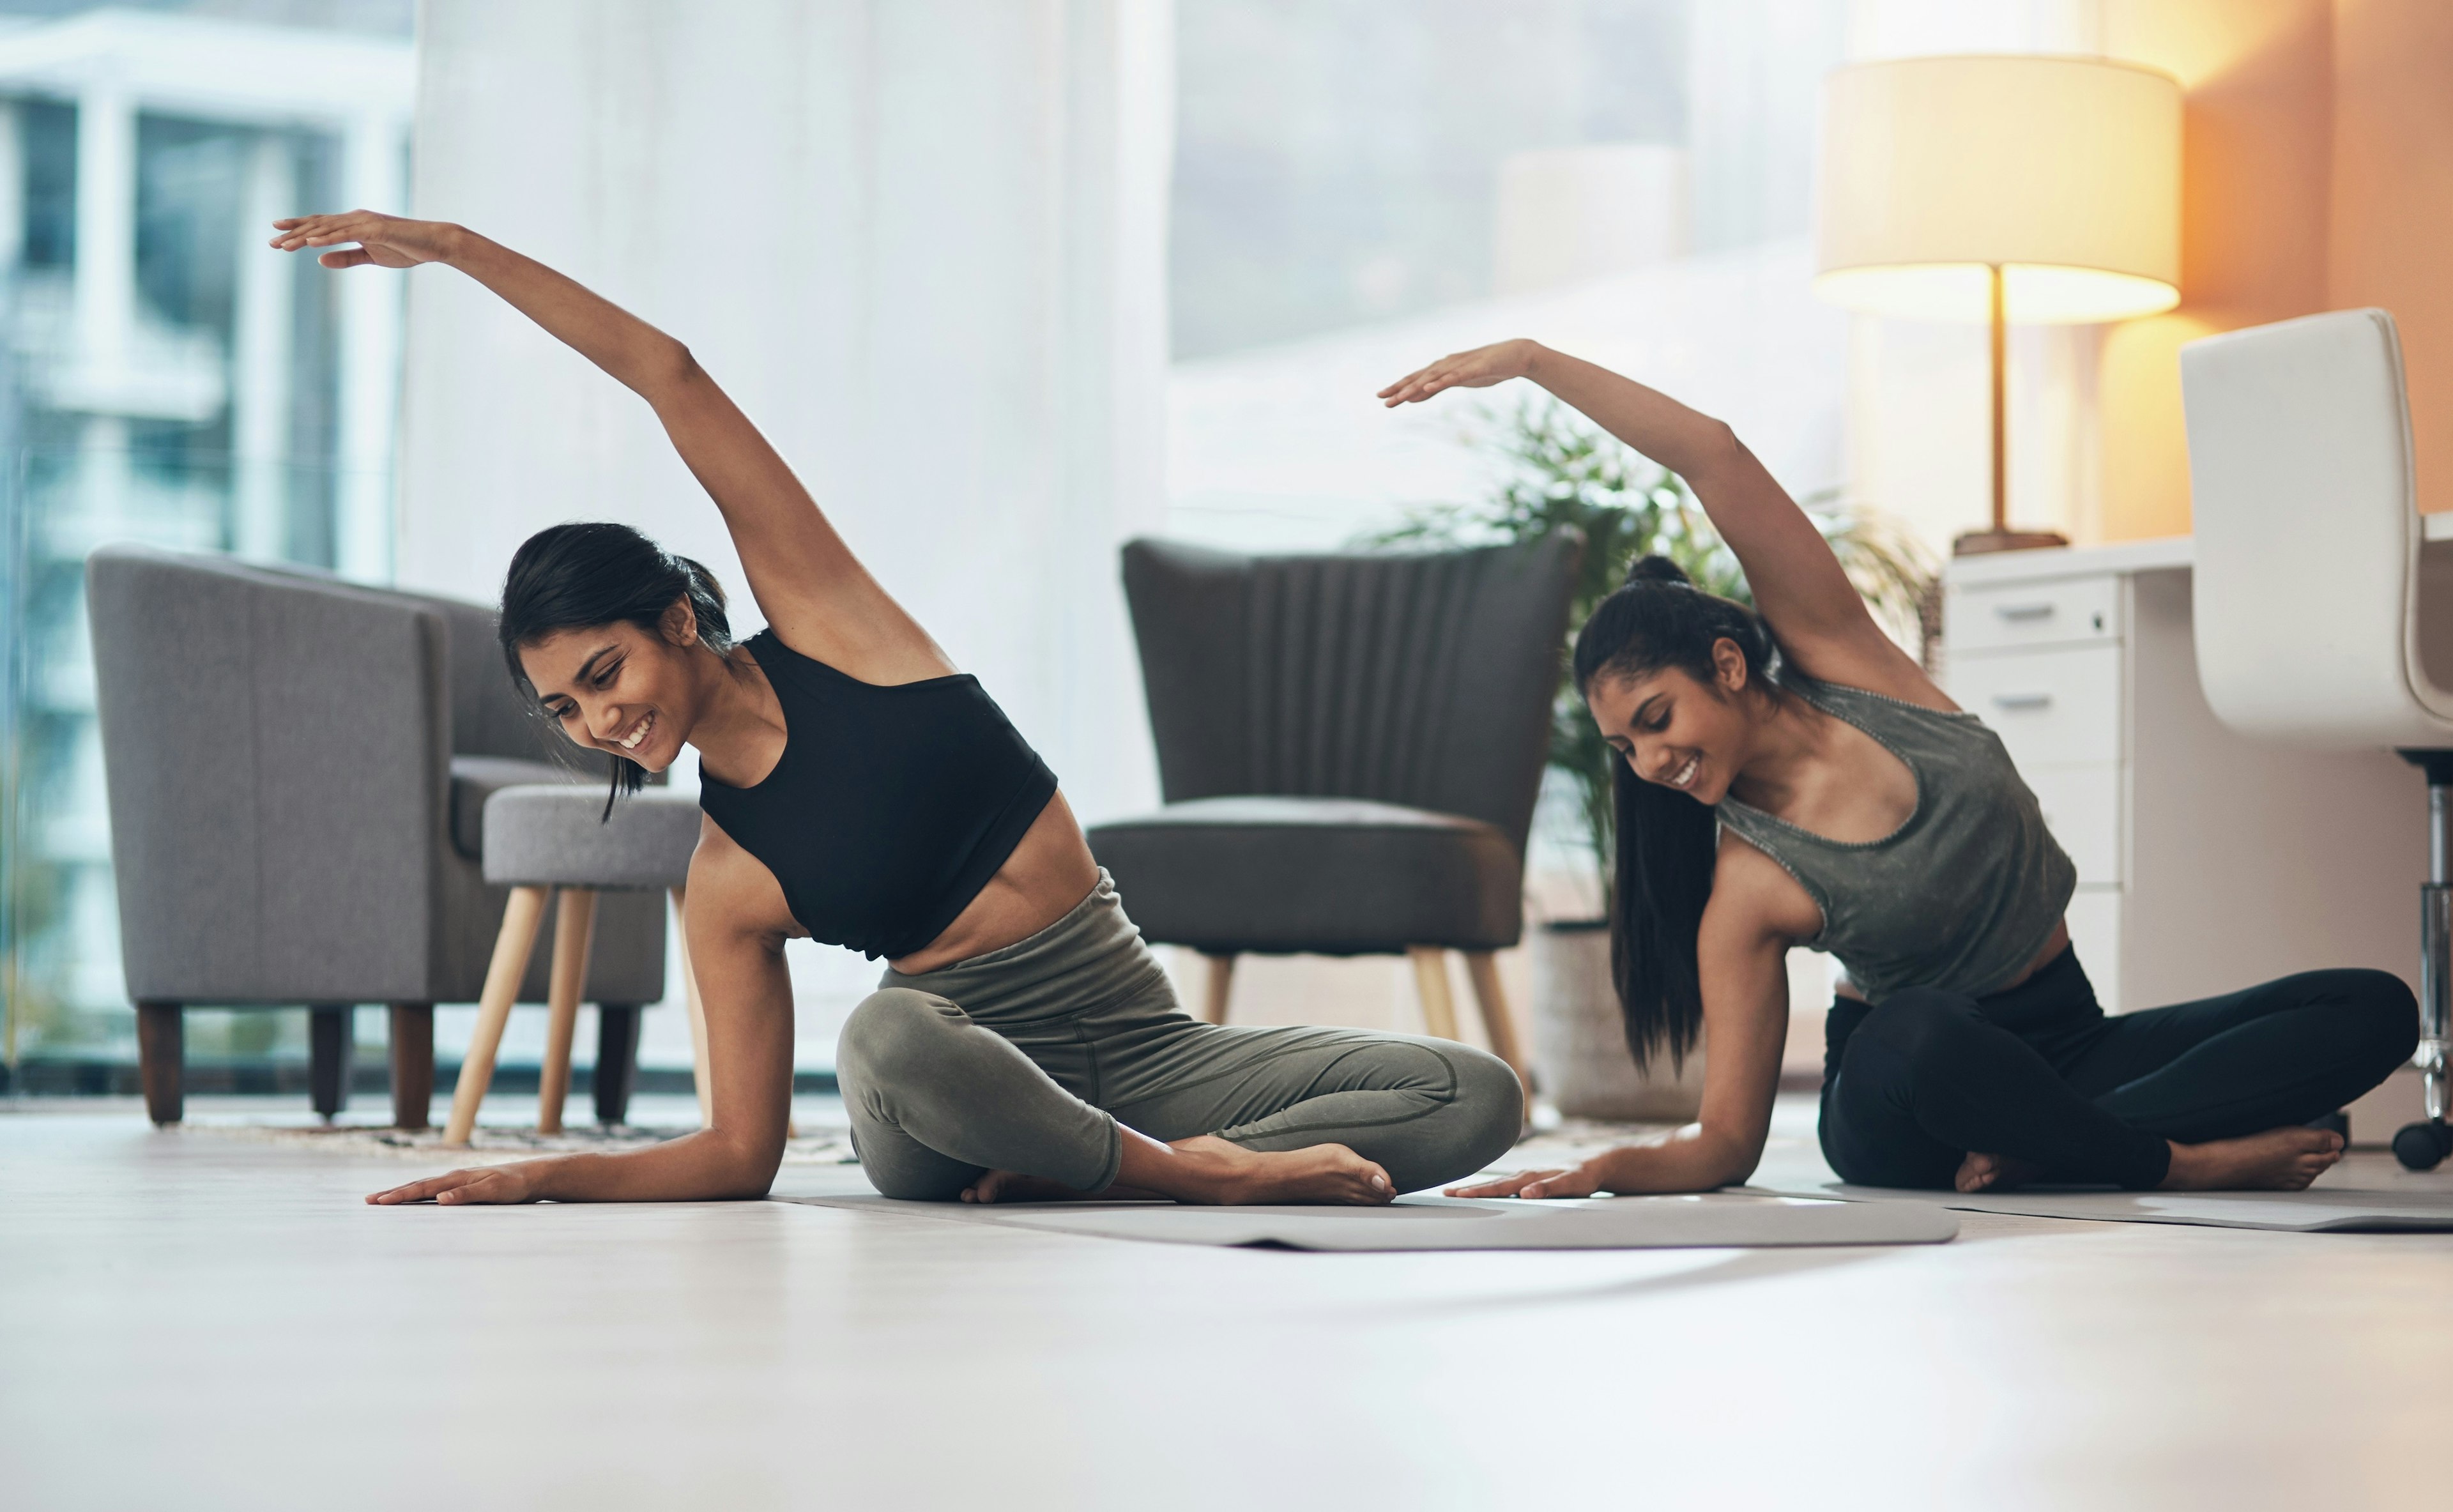 Two girls stretching